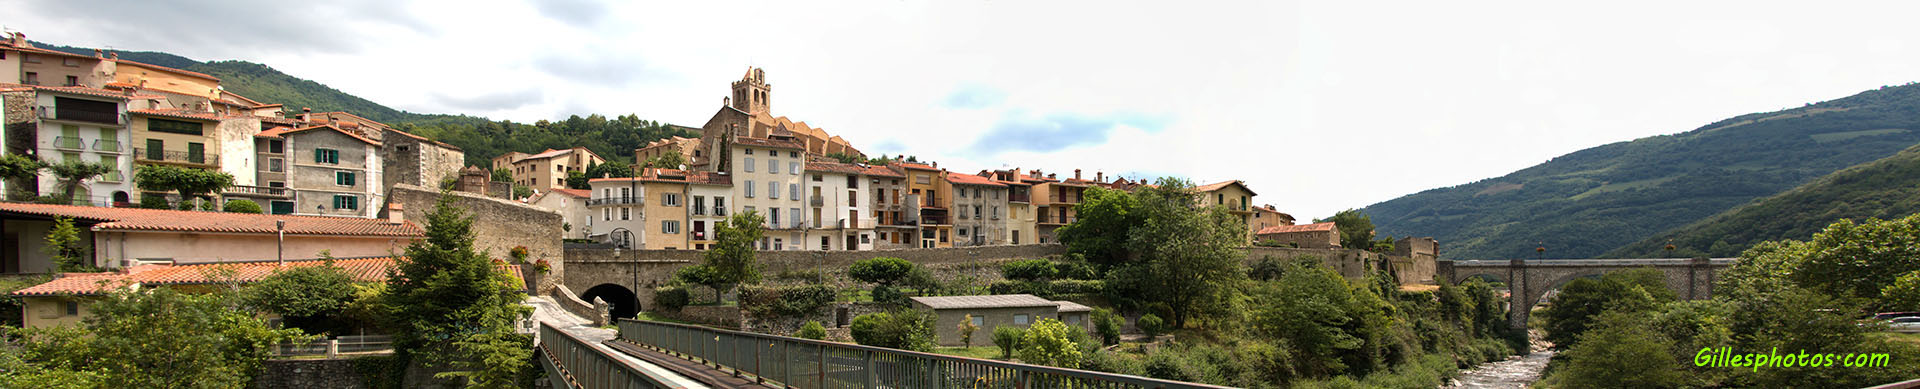  Prats de Mollo - la preste , Pyrénées orientale